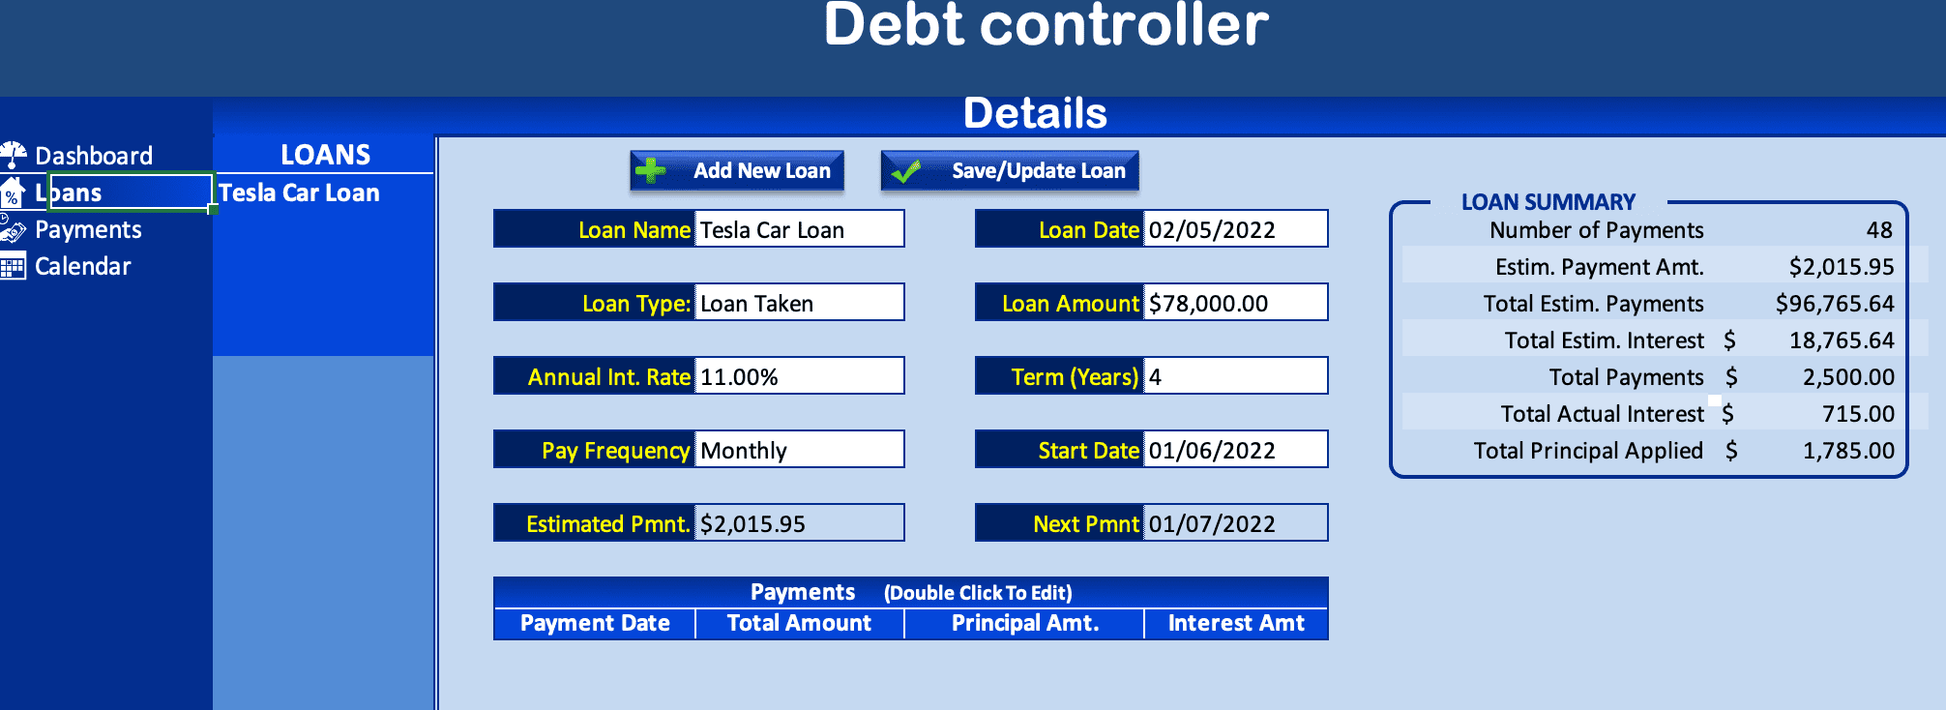 Personal Debt Controller - XLDB Spreadsheet Solutions